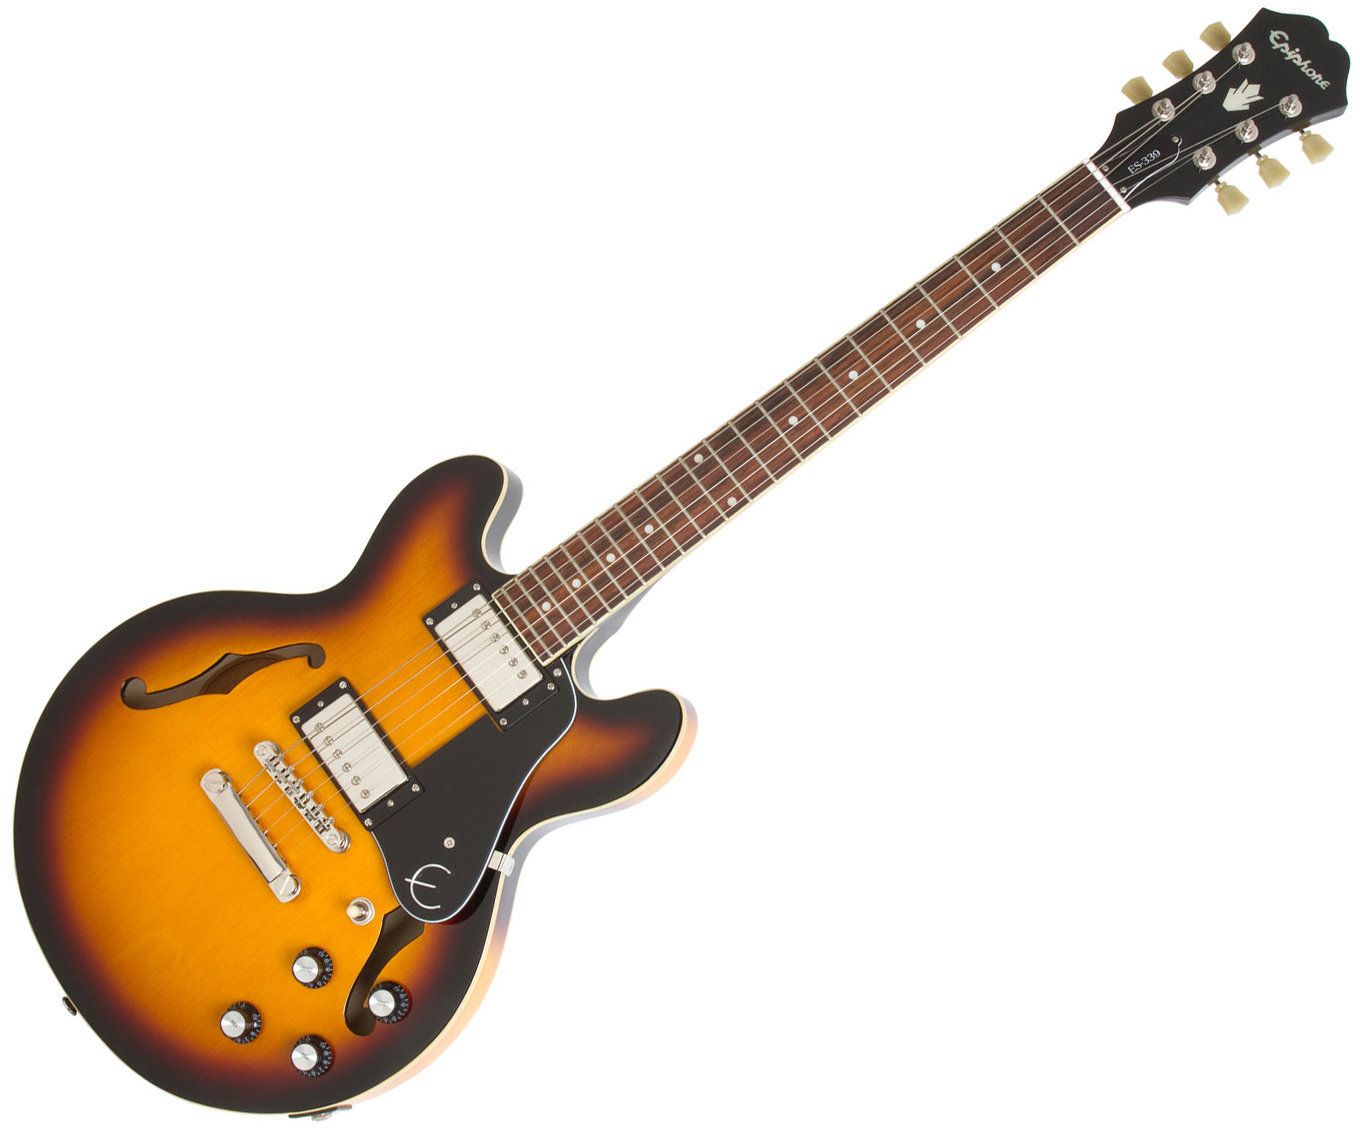 Semiakustická kytara Epiphone ES-339 Pro Vintage Sunburst